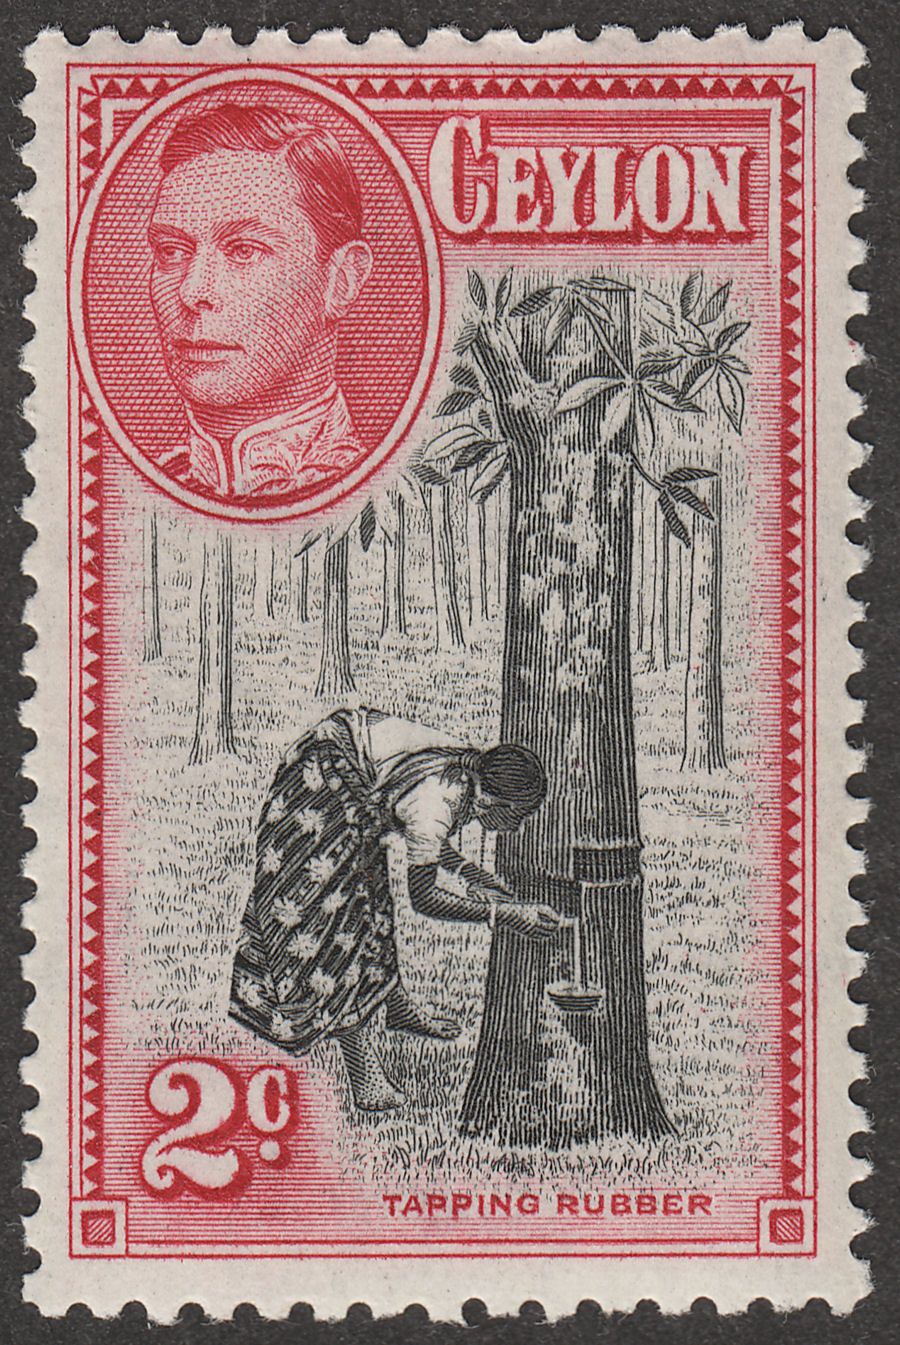 Ceylon 1938 KGVI 2c Black and Carmine perf 11½x13 Mint SG386